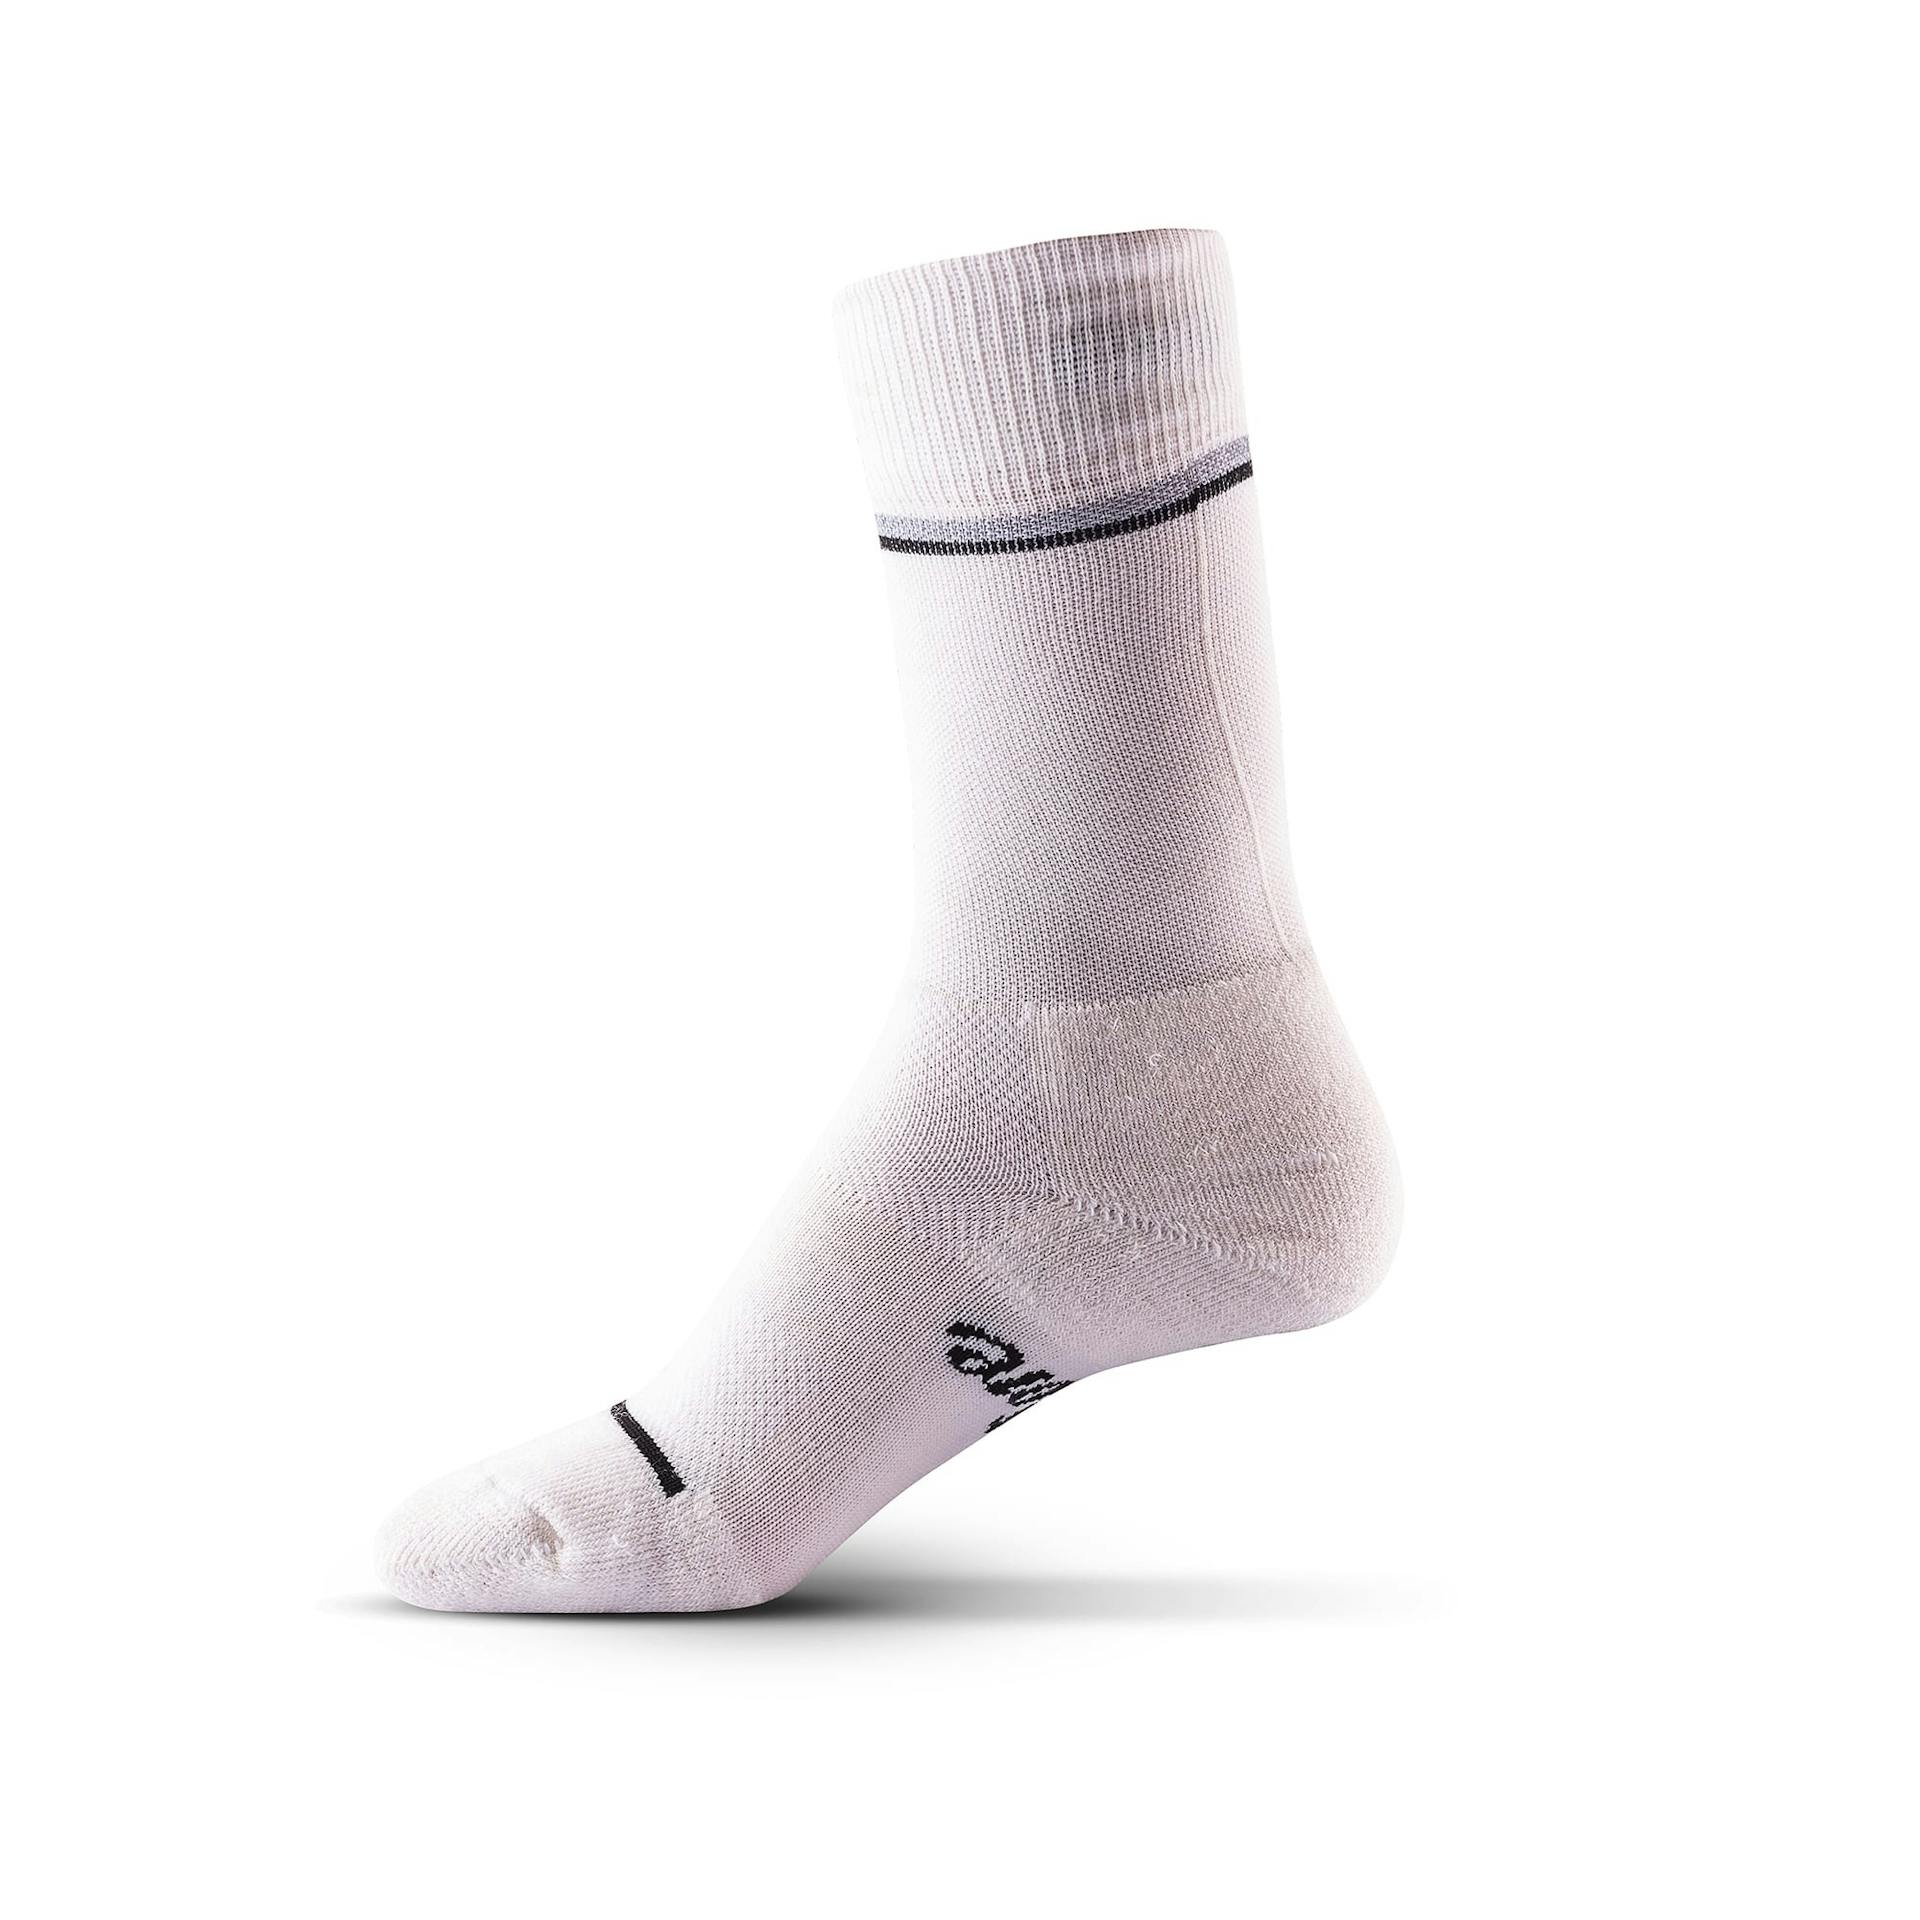 Merino Winter Socks - White
                        